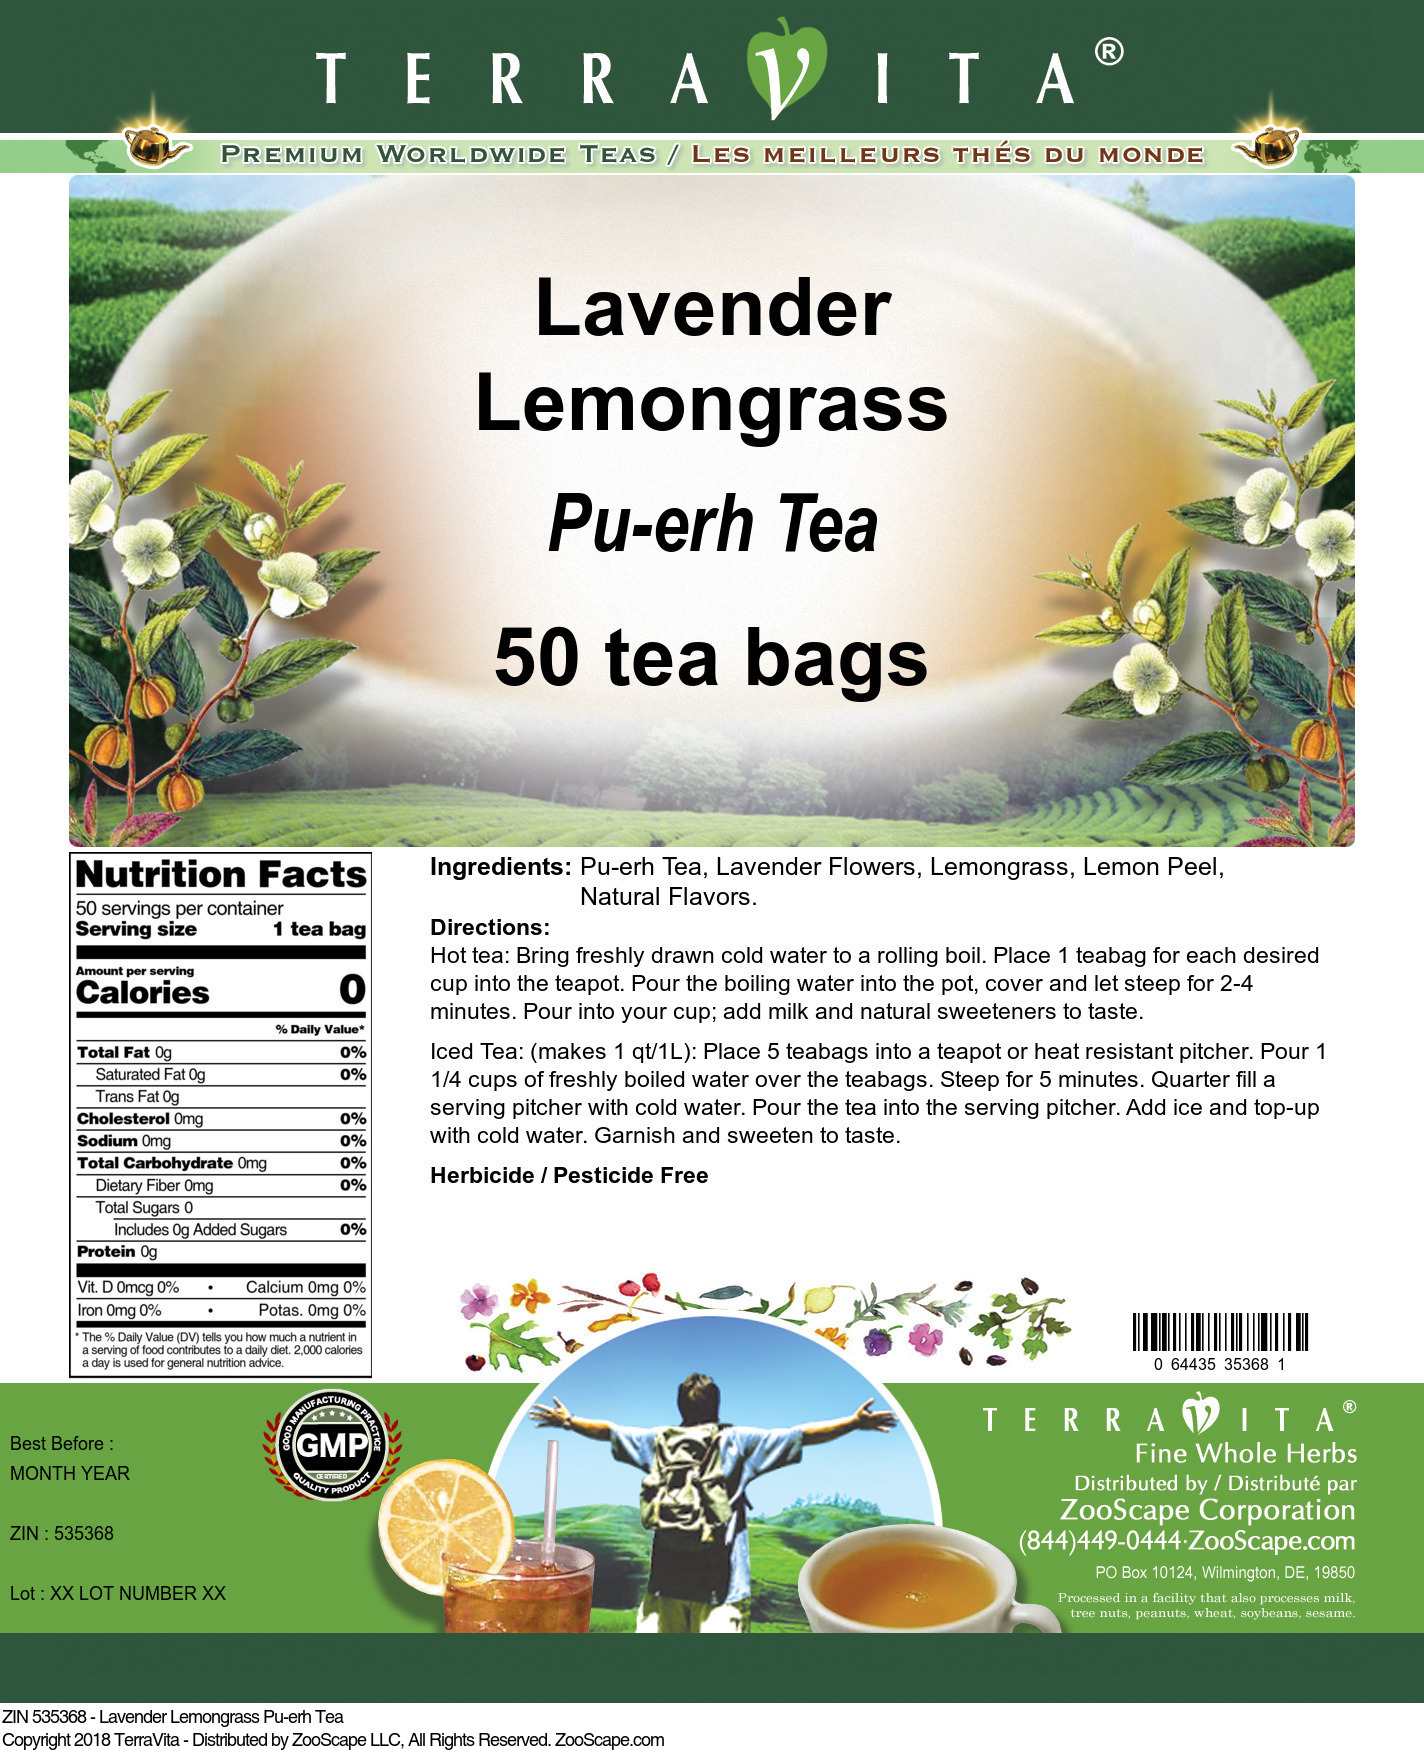 Lavender Lemongrass Pu-erh Tea - Label